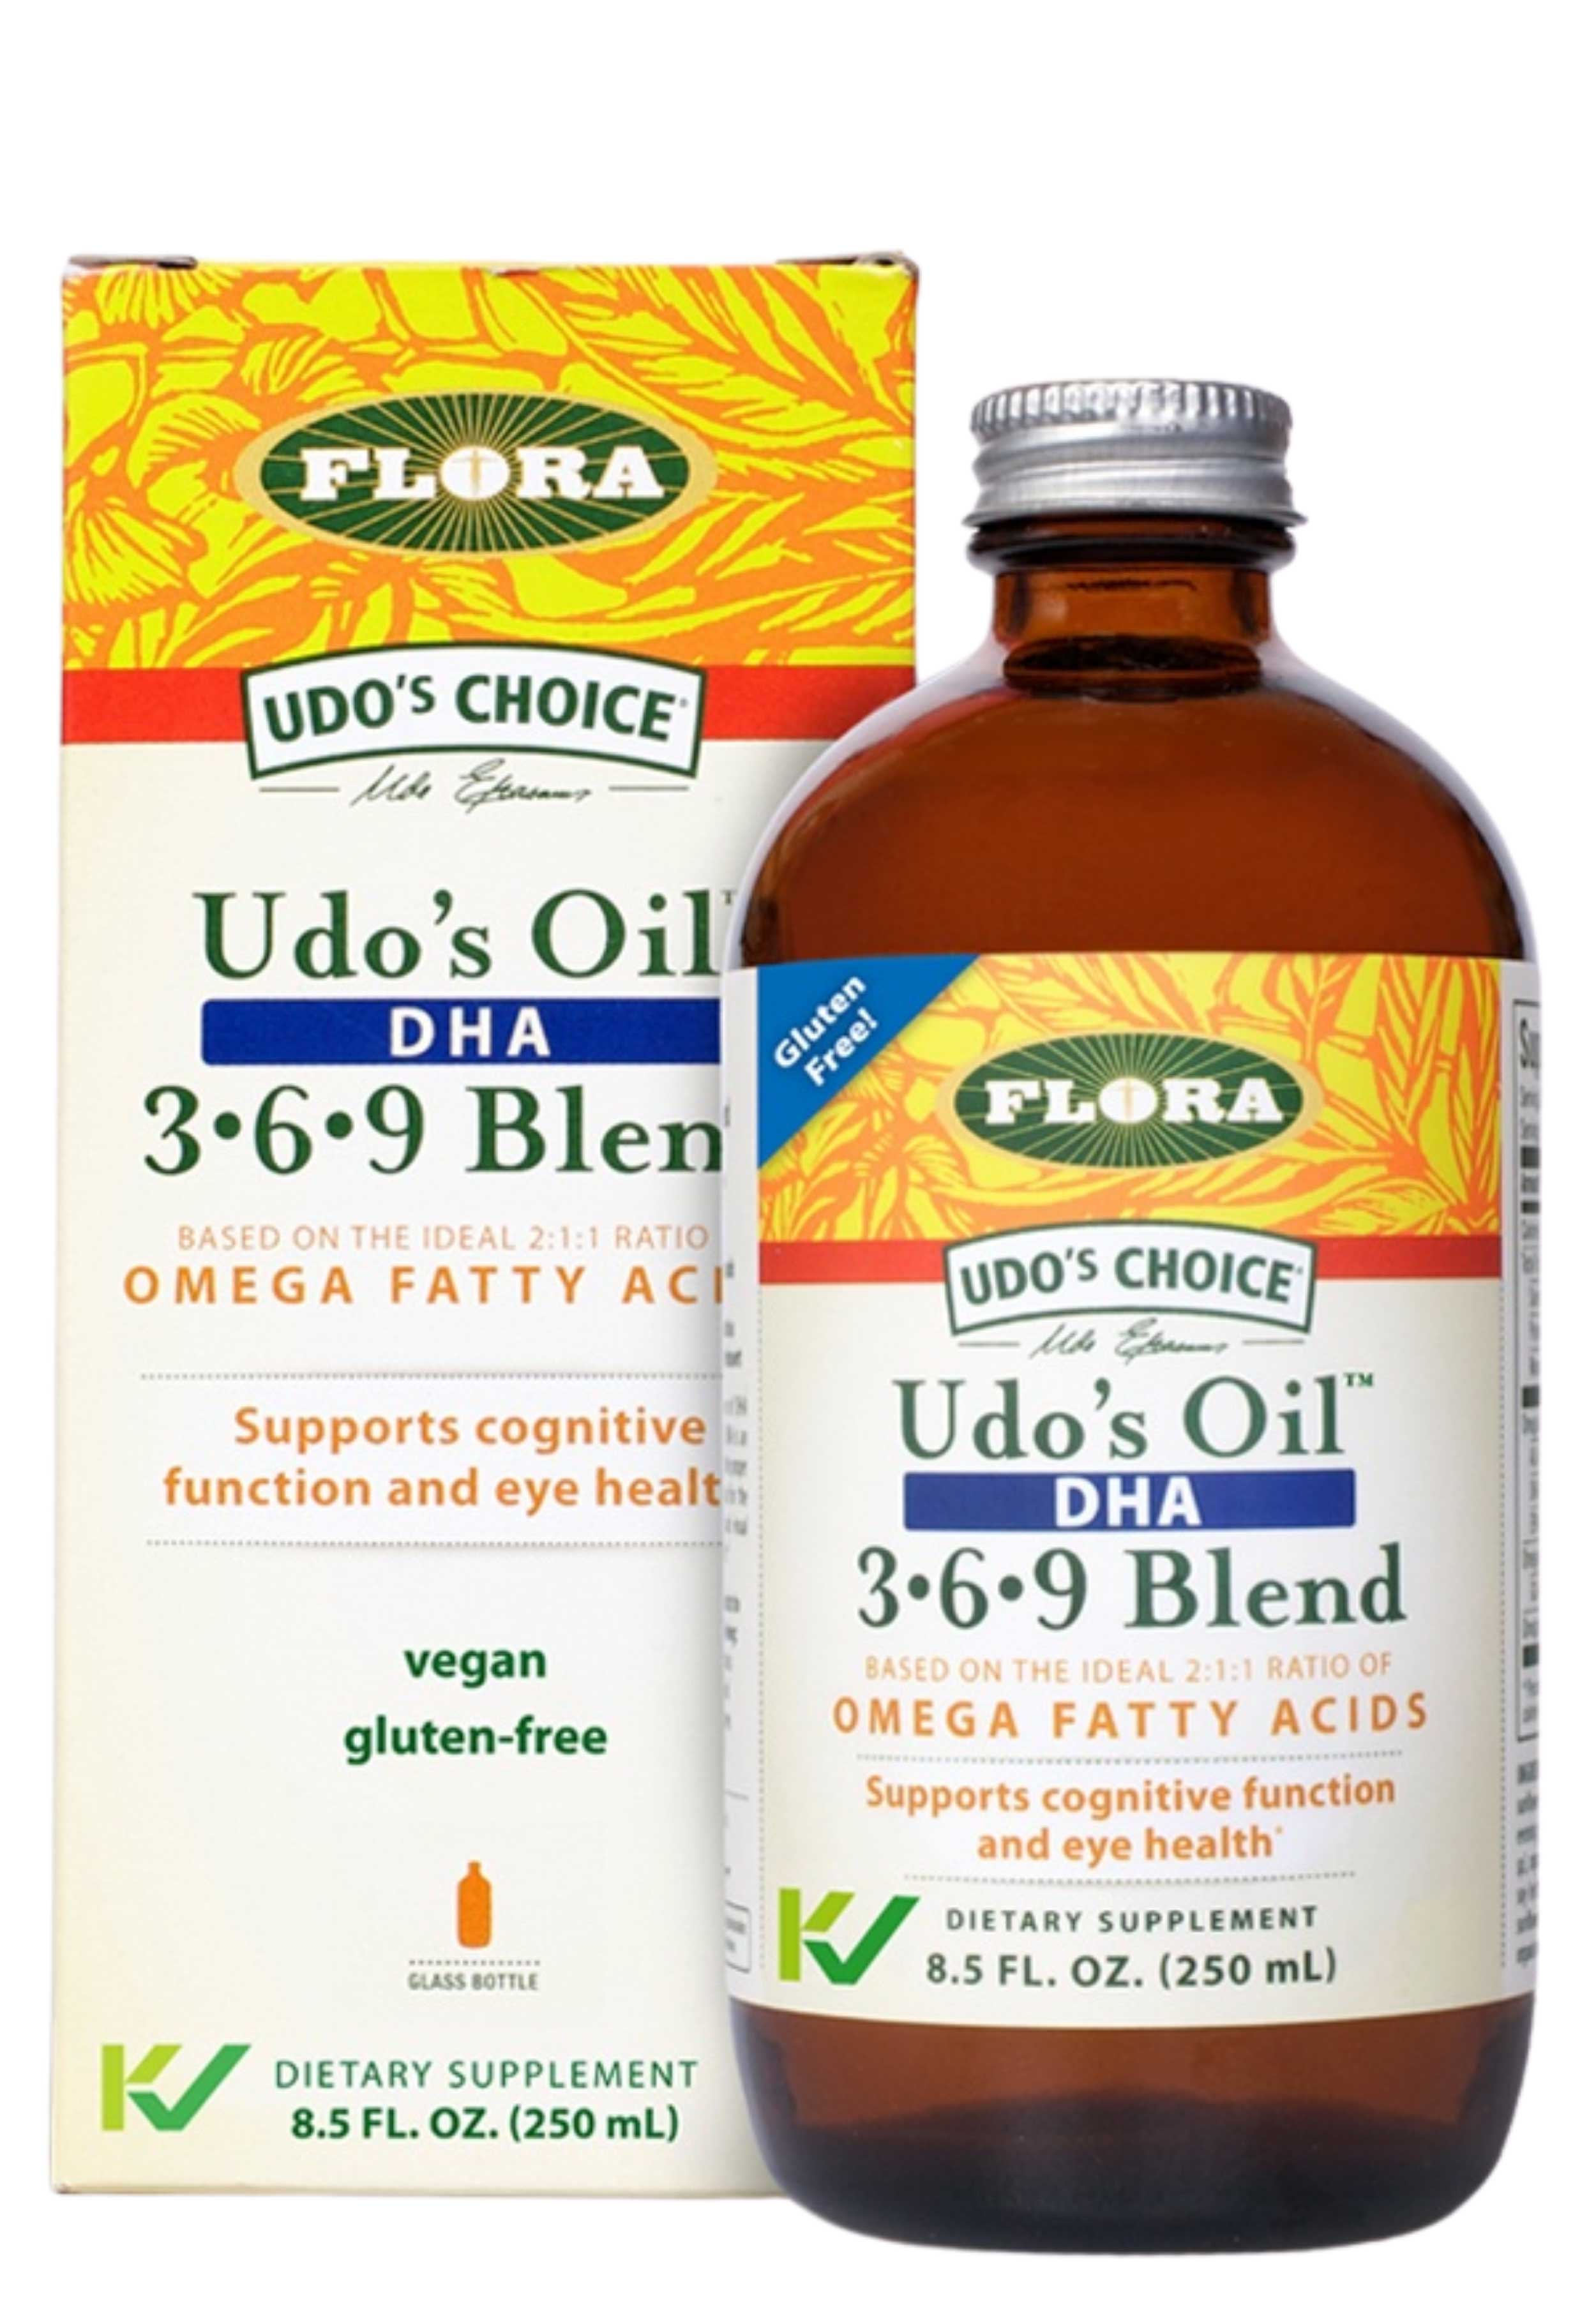 Flora Udo's Choice DHA Oil Blend (3•6•9 Blend)